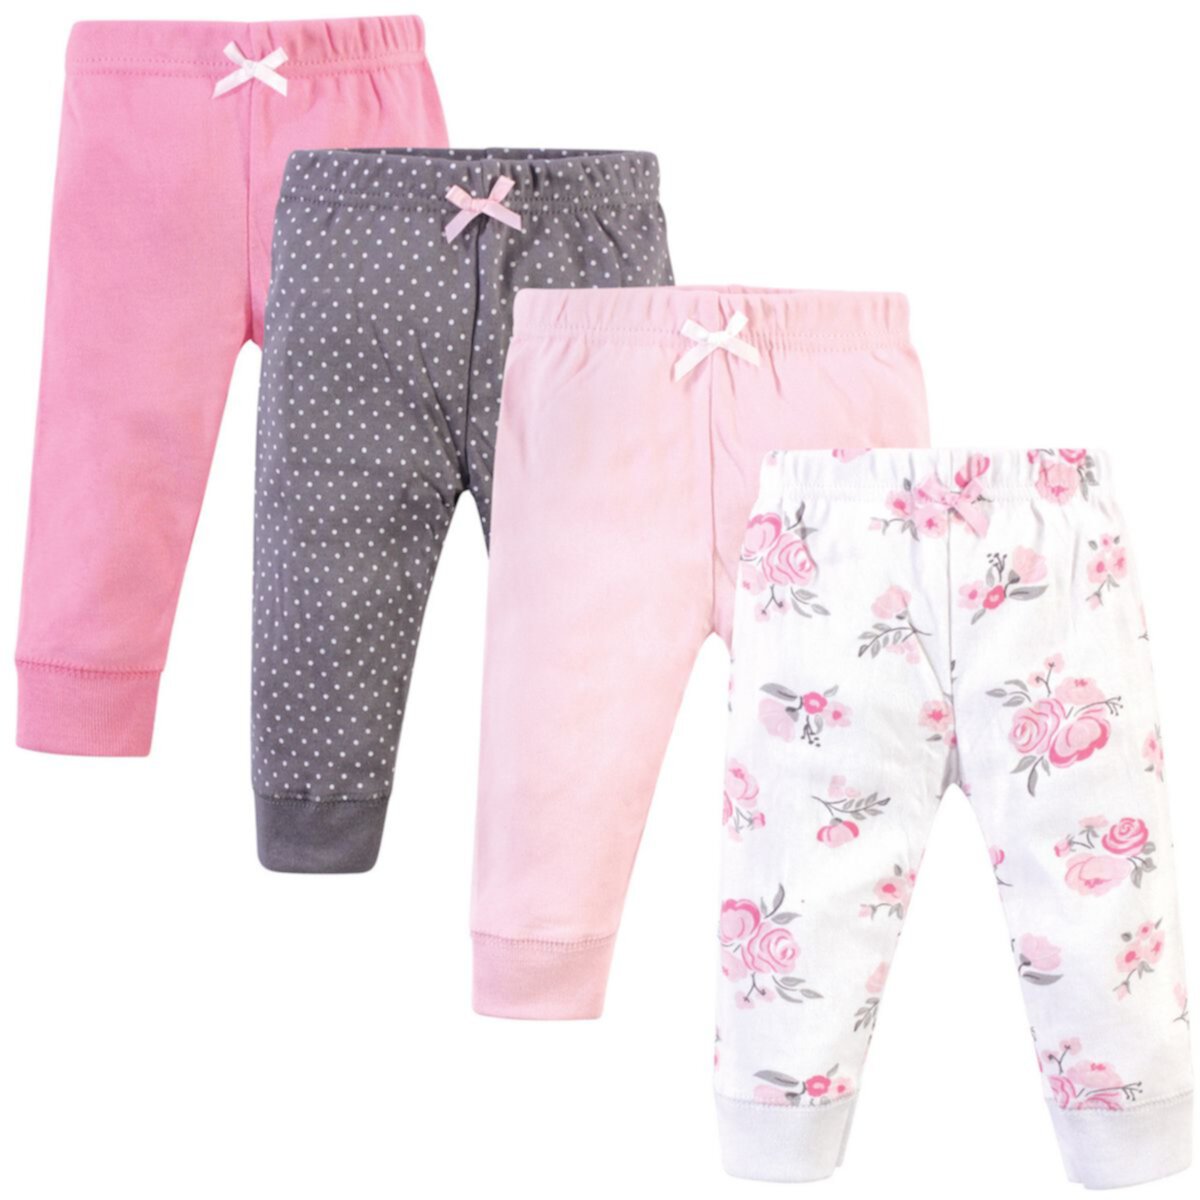 Hudson Baby Infant and Toddler Girl Cotton Pants 4pk, Basic Pink Floral Hudson Baby